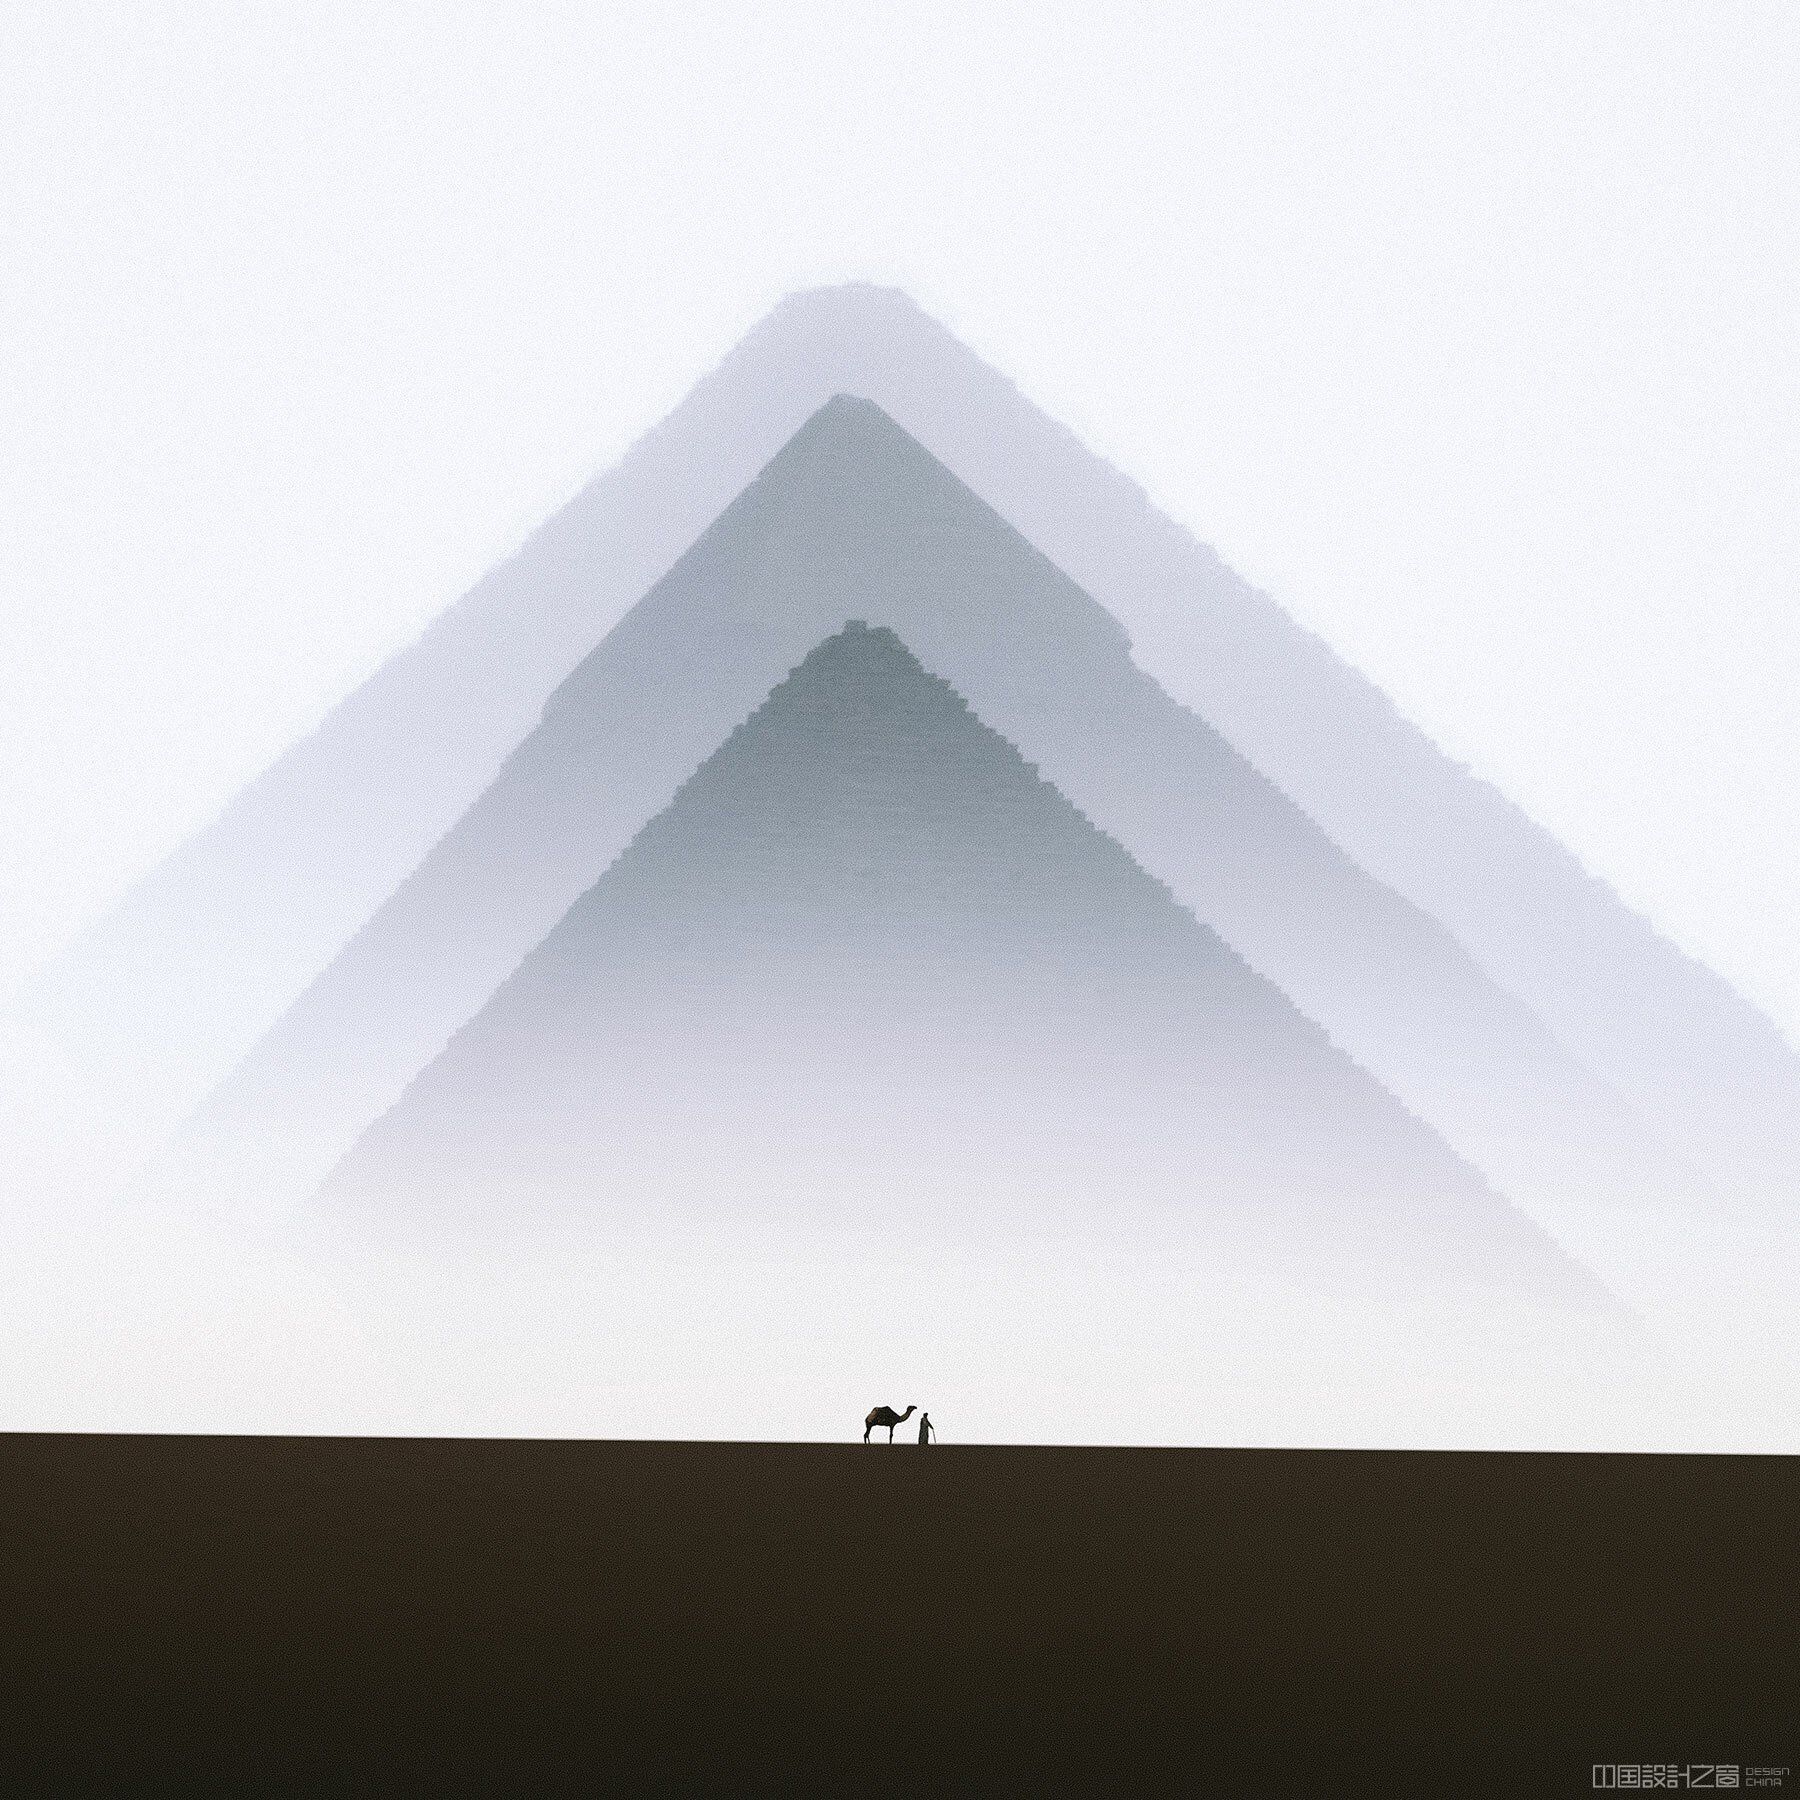 karim-amr-egypt-pyramids-photography-designboom-05a